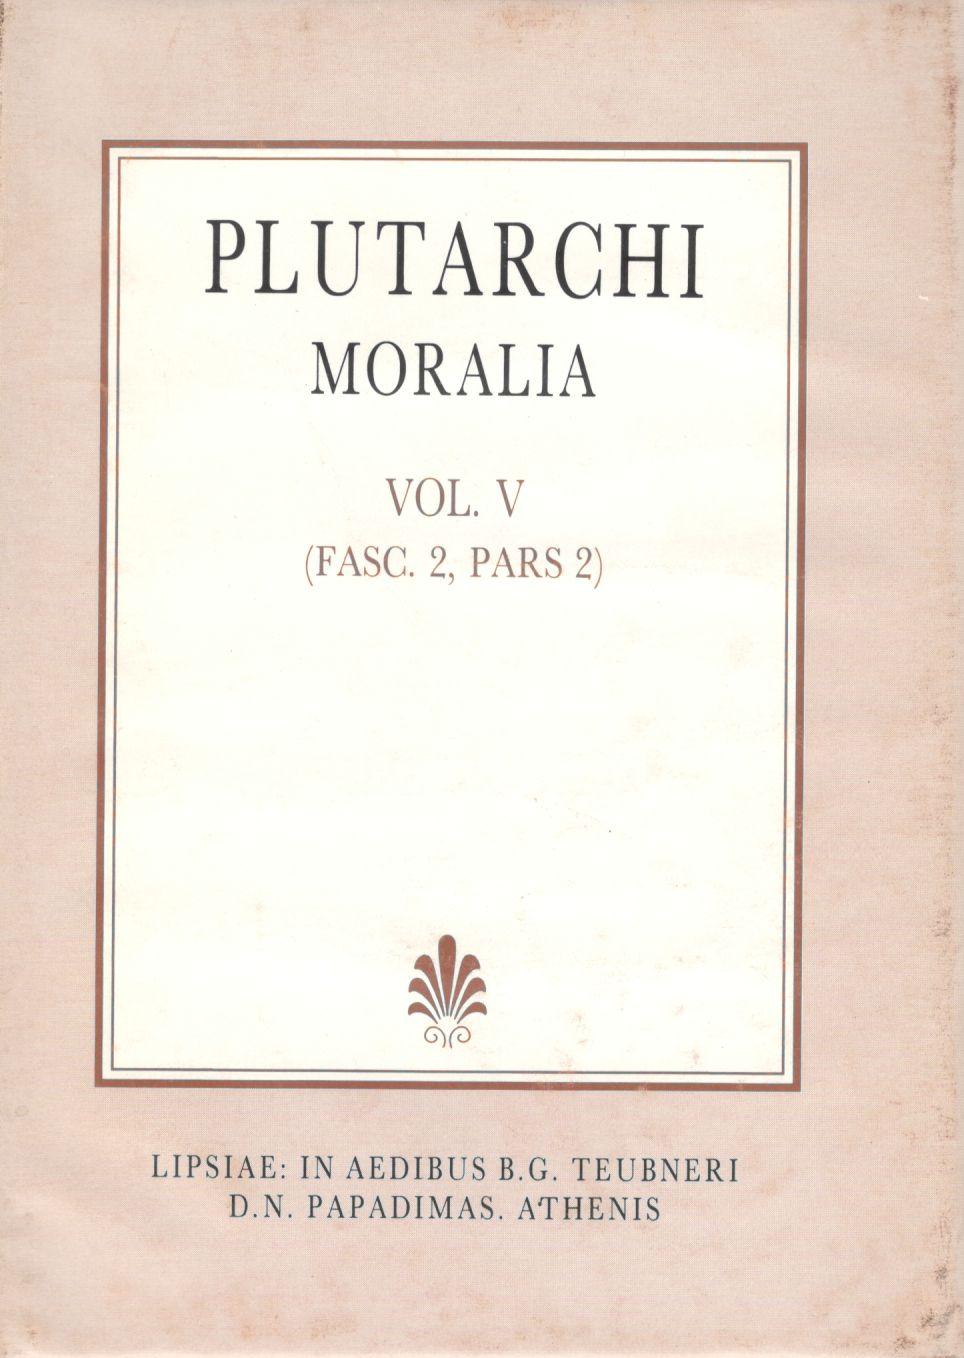 Plutarchi Moralia, Vol. V, (Fasc. 2, Pars 2), [Πλουτάρχου, Ηθικά, τ. Ε